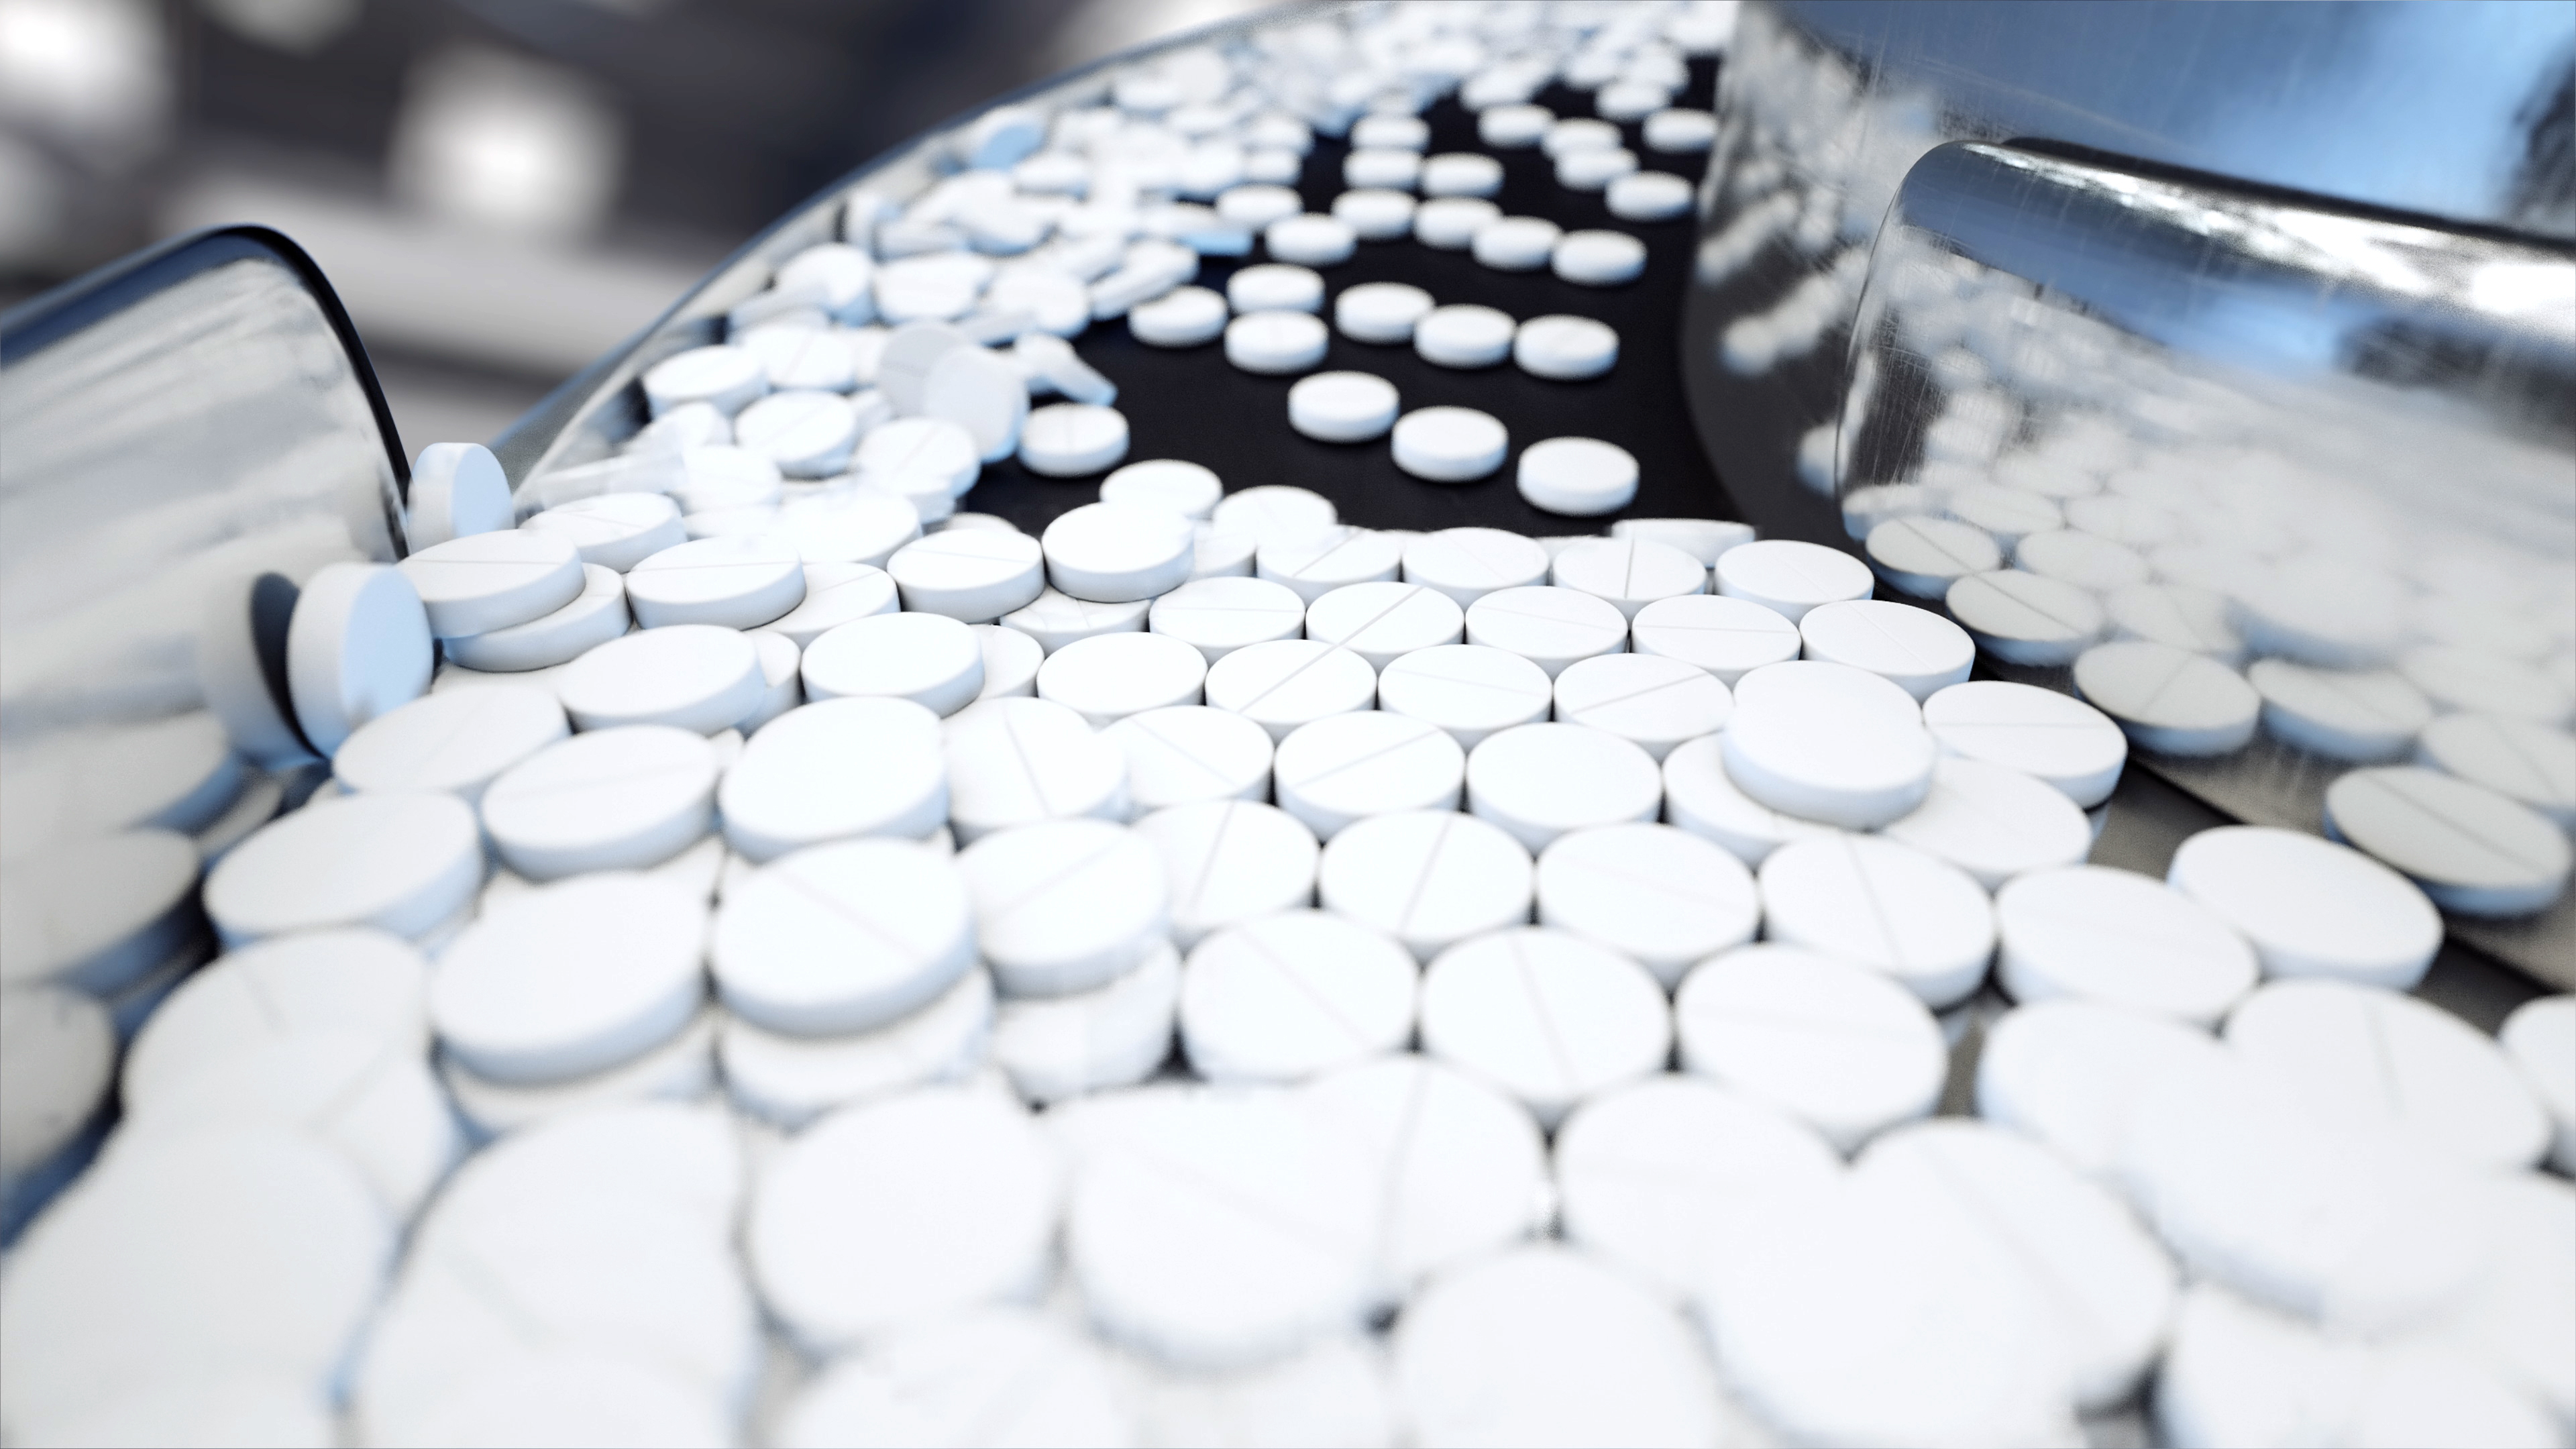 Prescription medication pills in manufacturing facility 